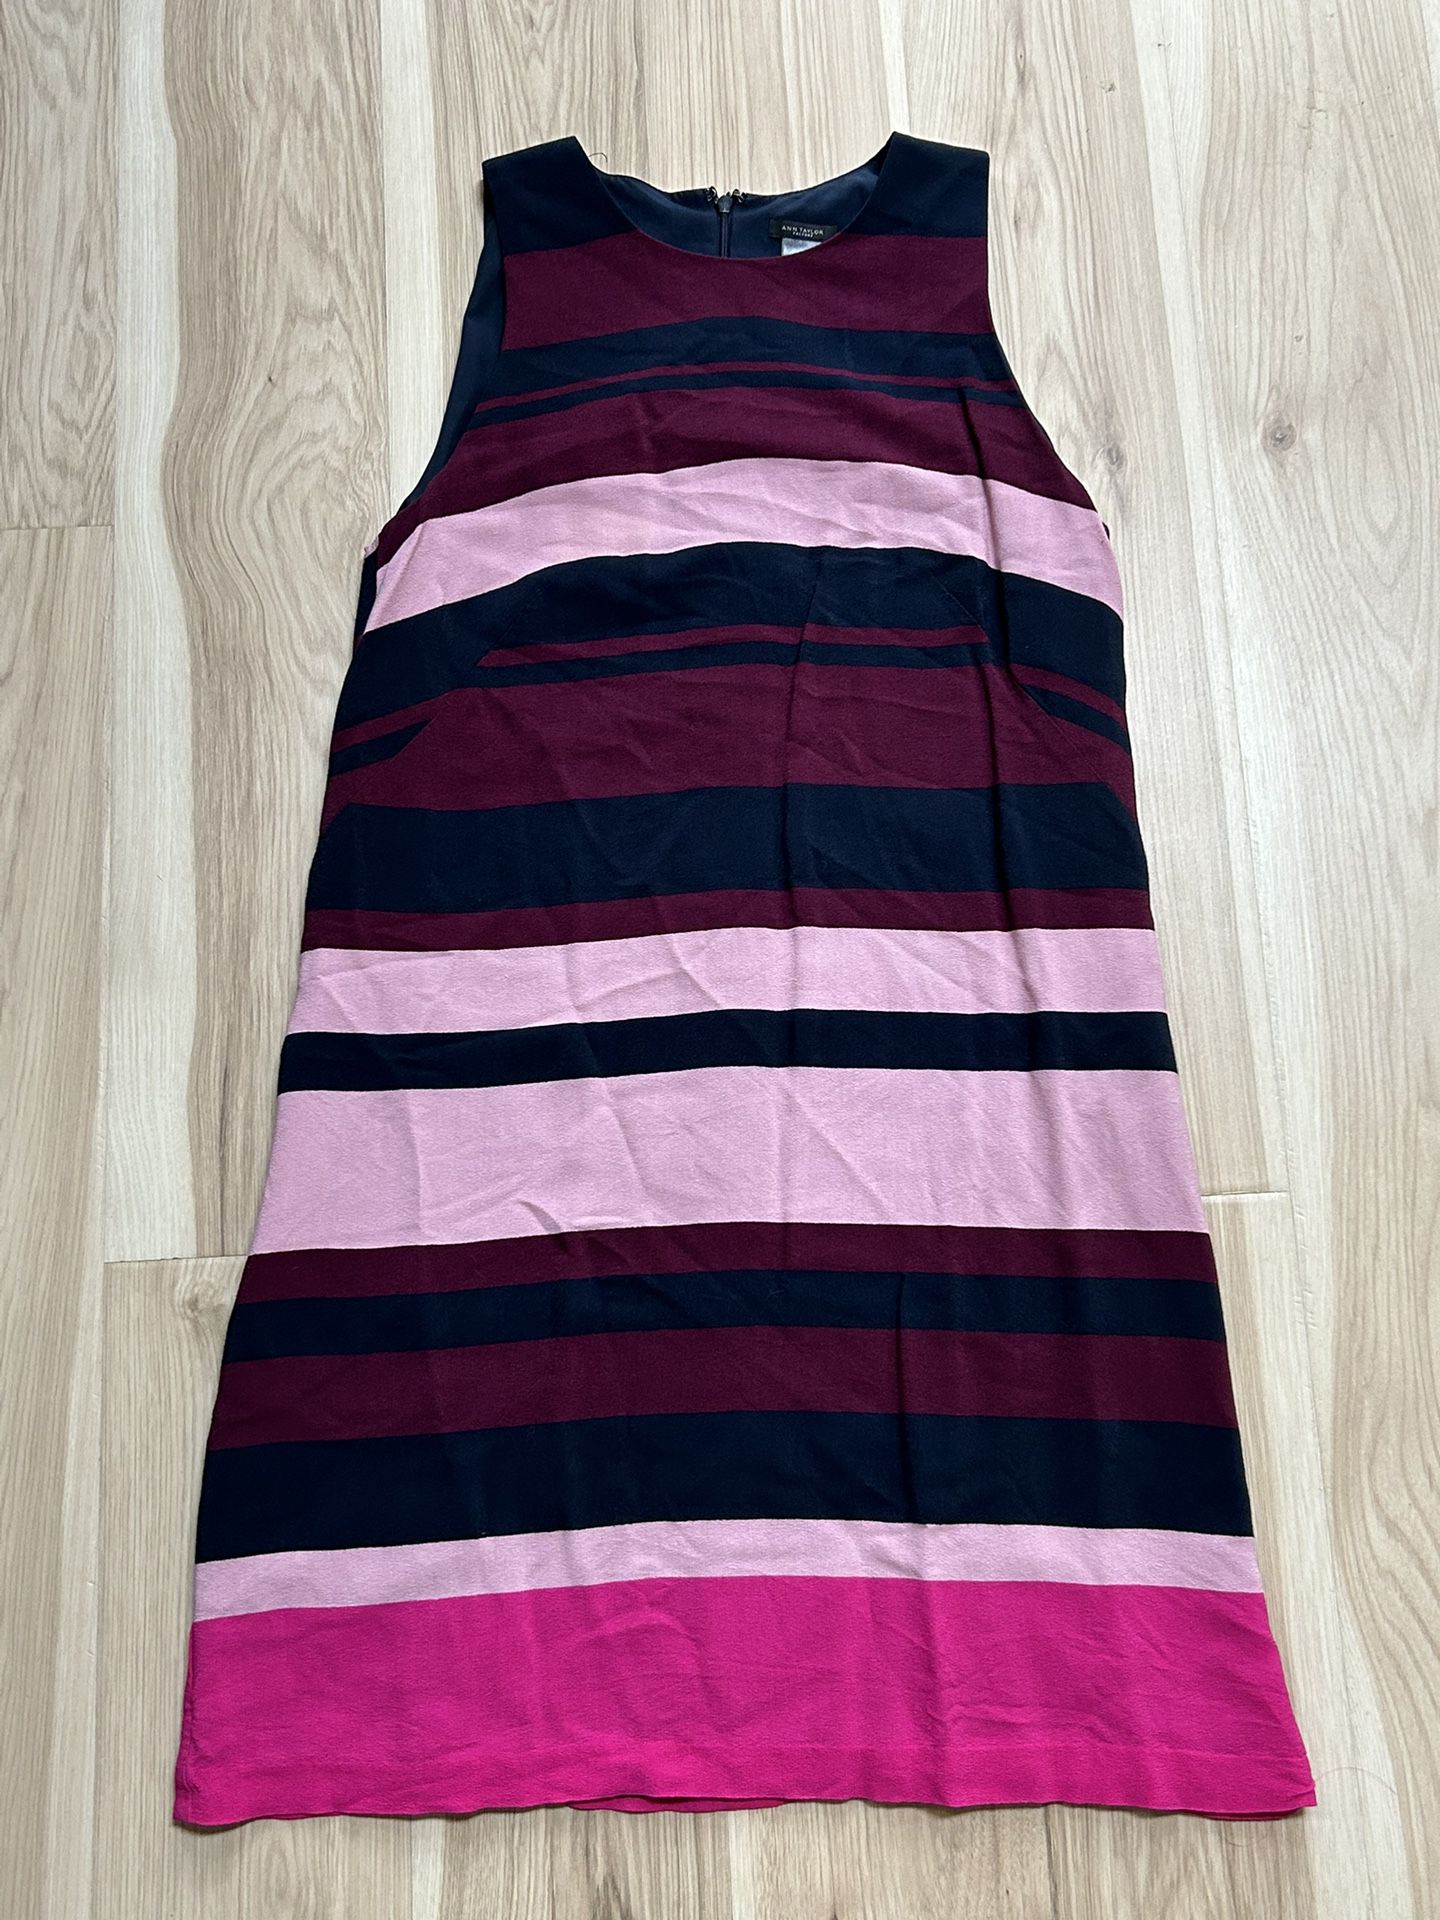 Ann Taylor Factory Dress Size 10 Purple Pink Navy Blue Striped Sleeveless Sheath